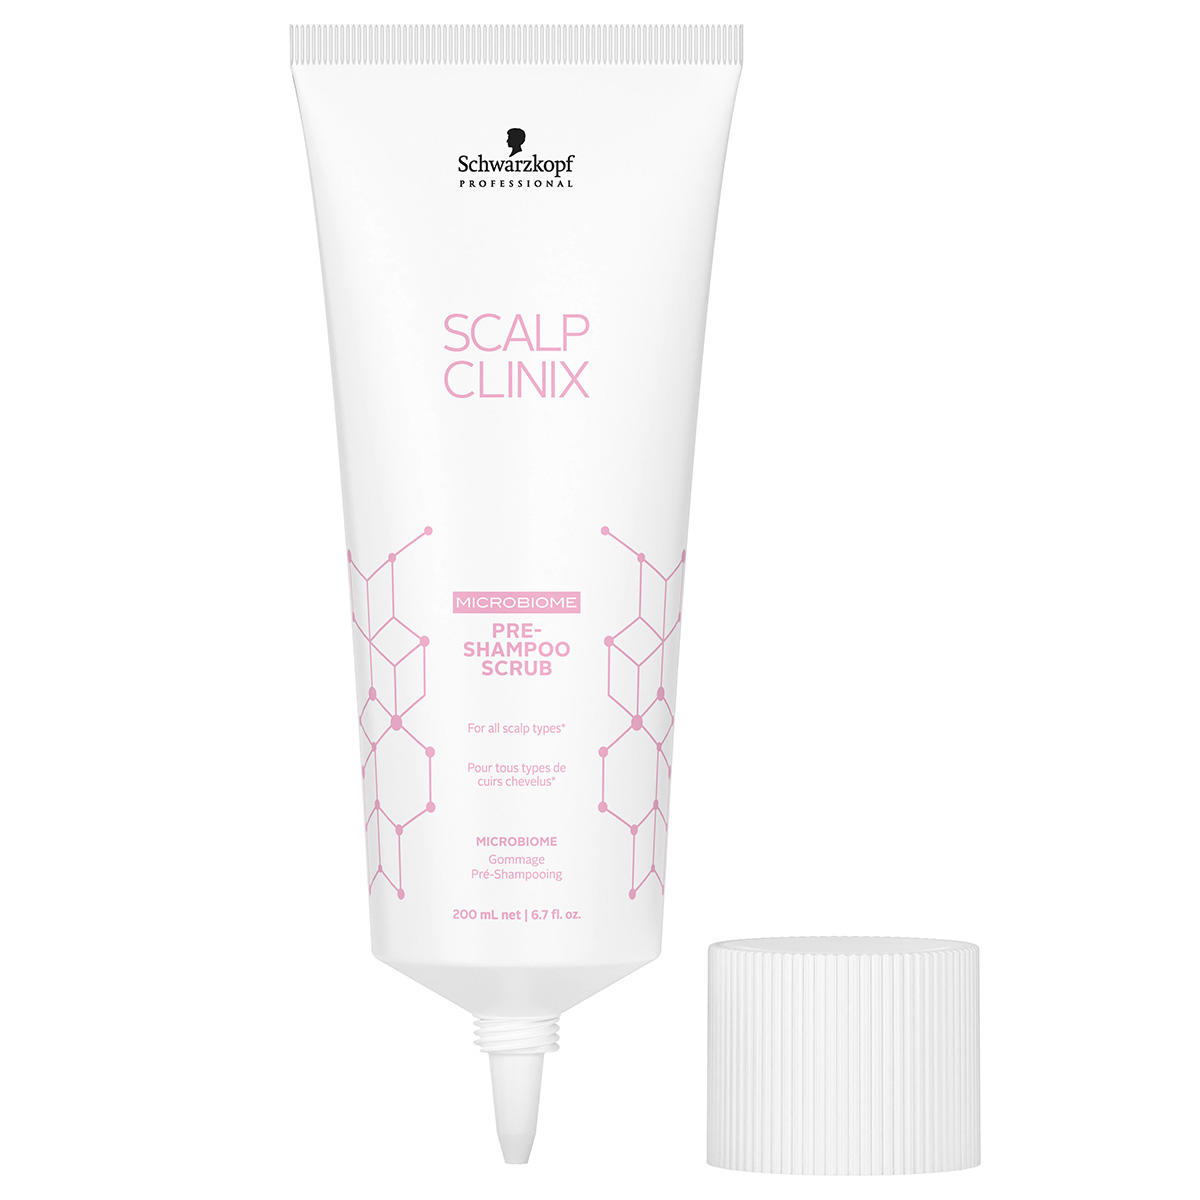 Schwarzkopf Professional Scalp Clinix Pre-Shampoo Scrub 200 ml - 2